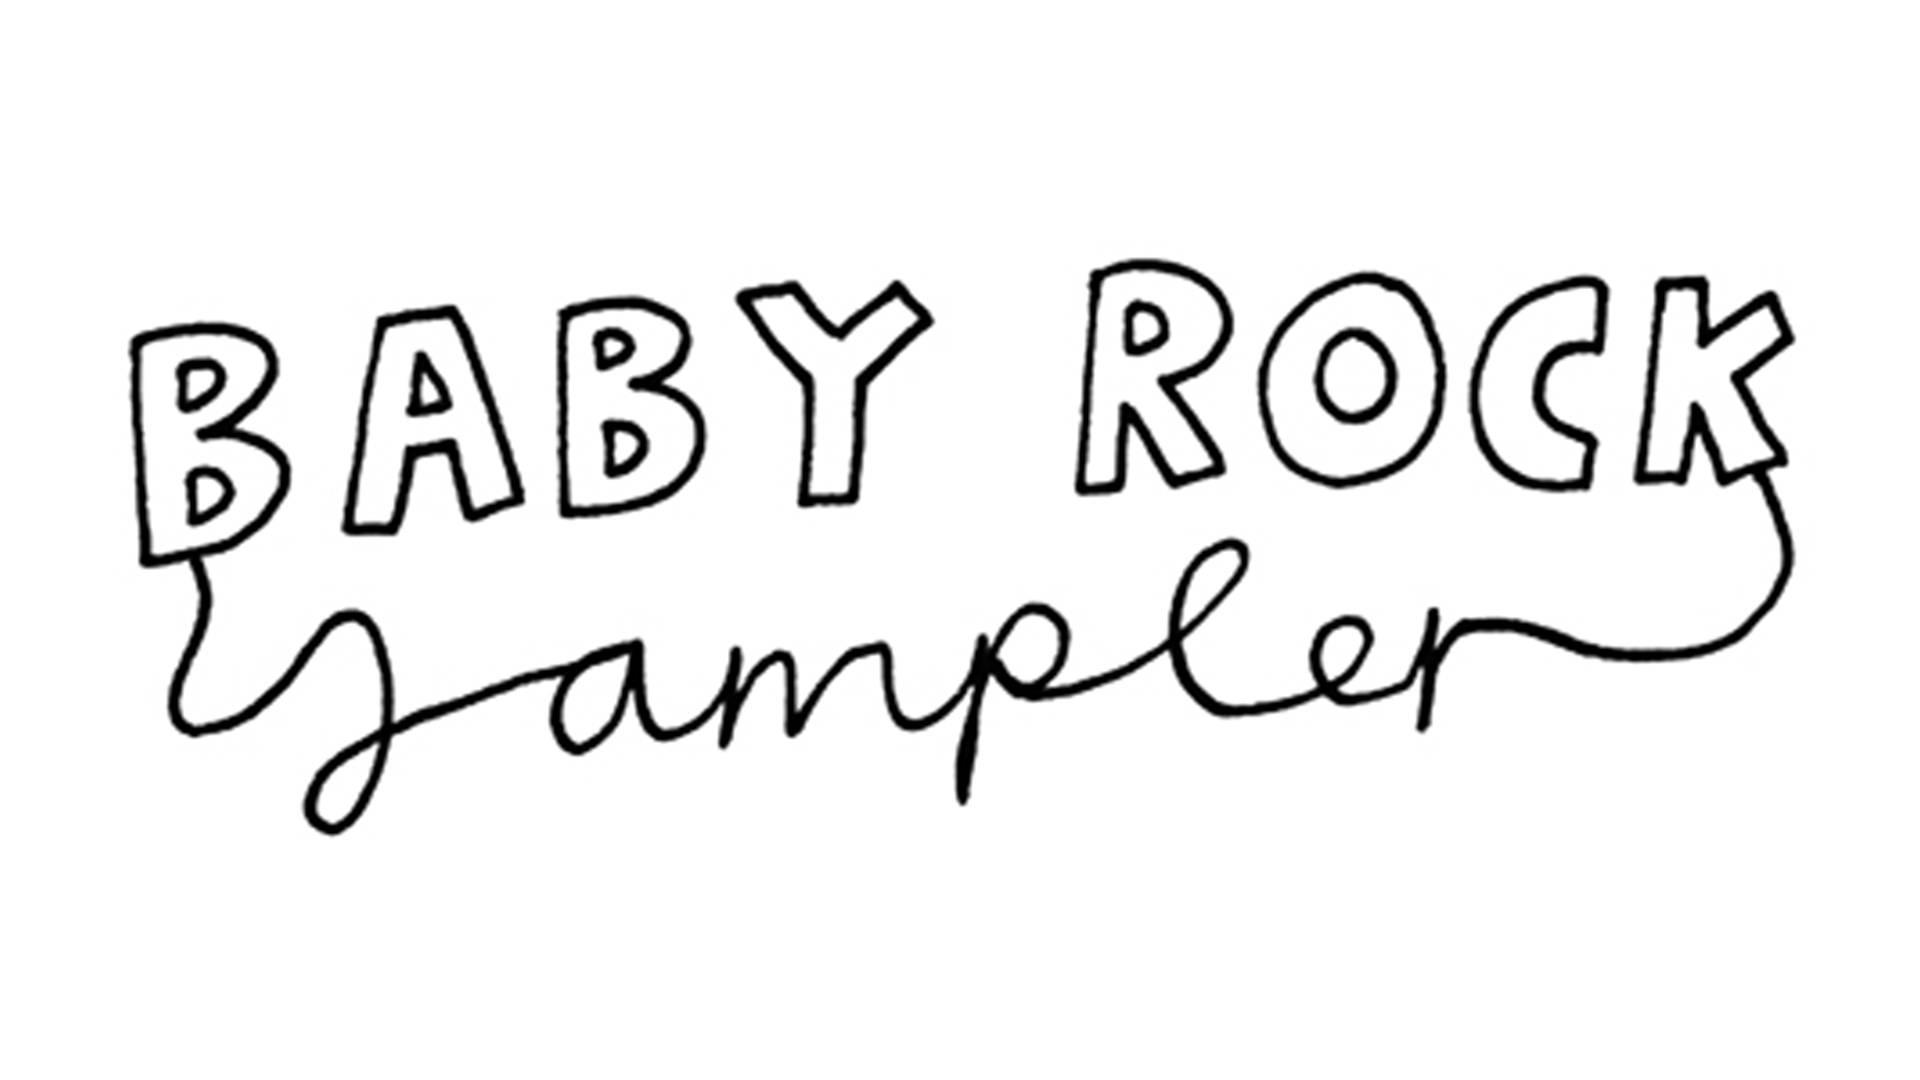 babyrocksampler photo